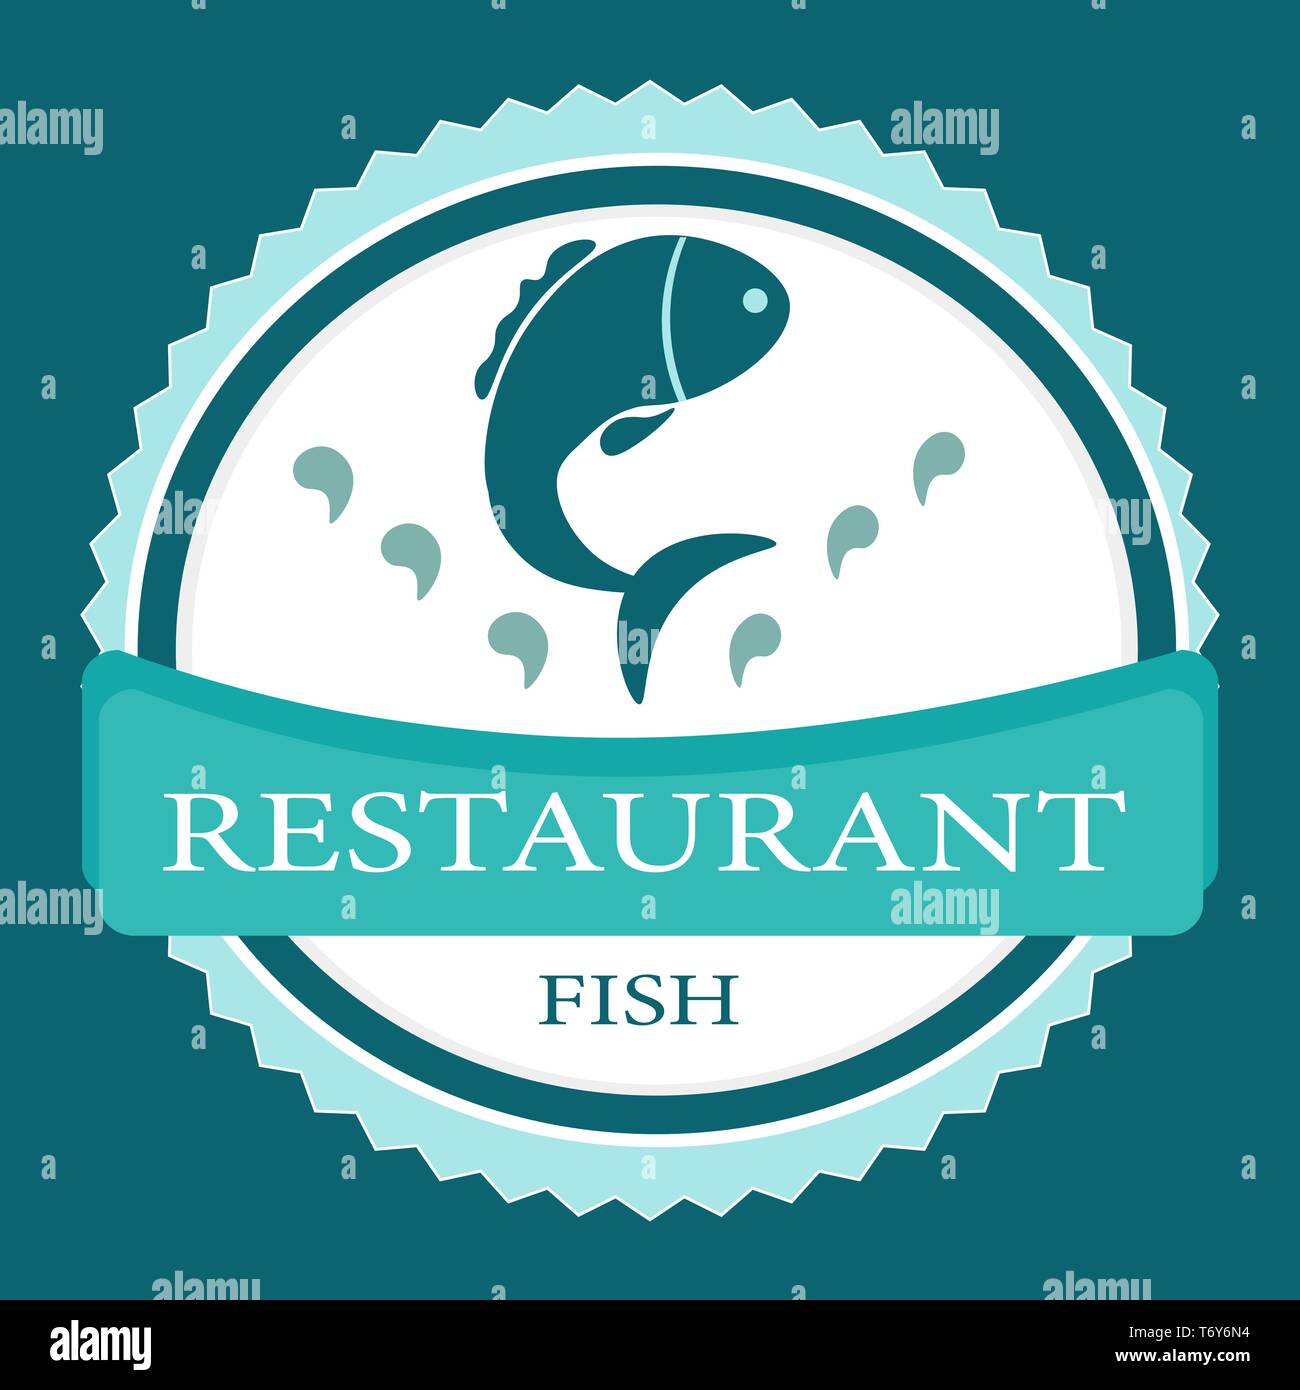 vector logo banner for advertising restaurant name blue turquoise color ...